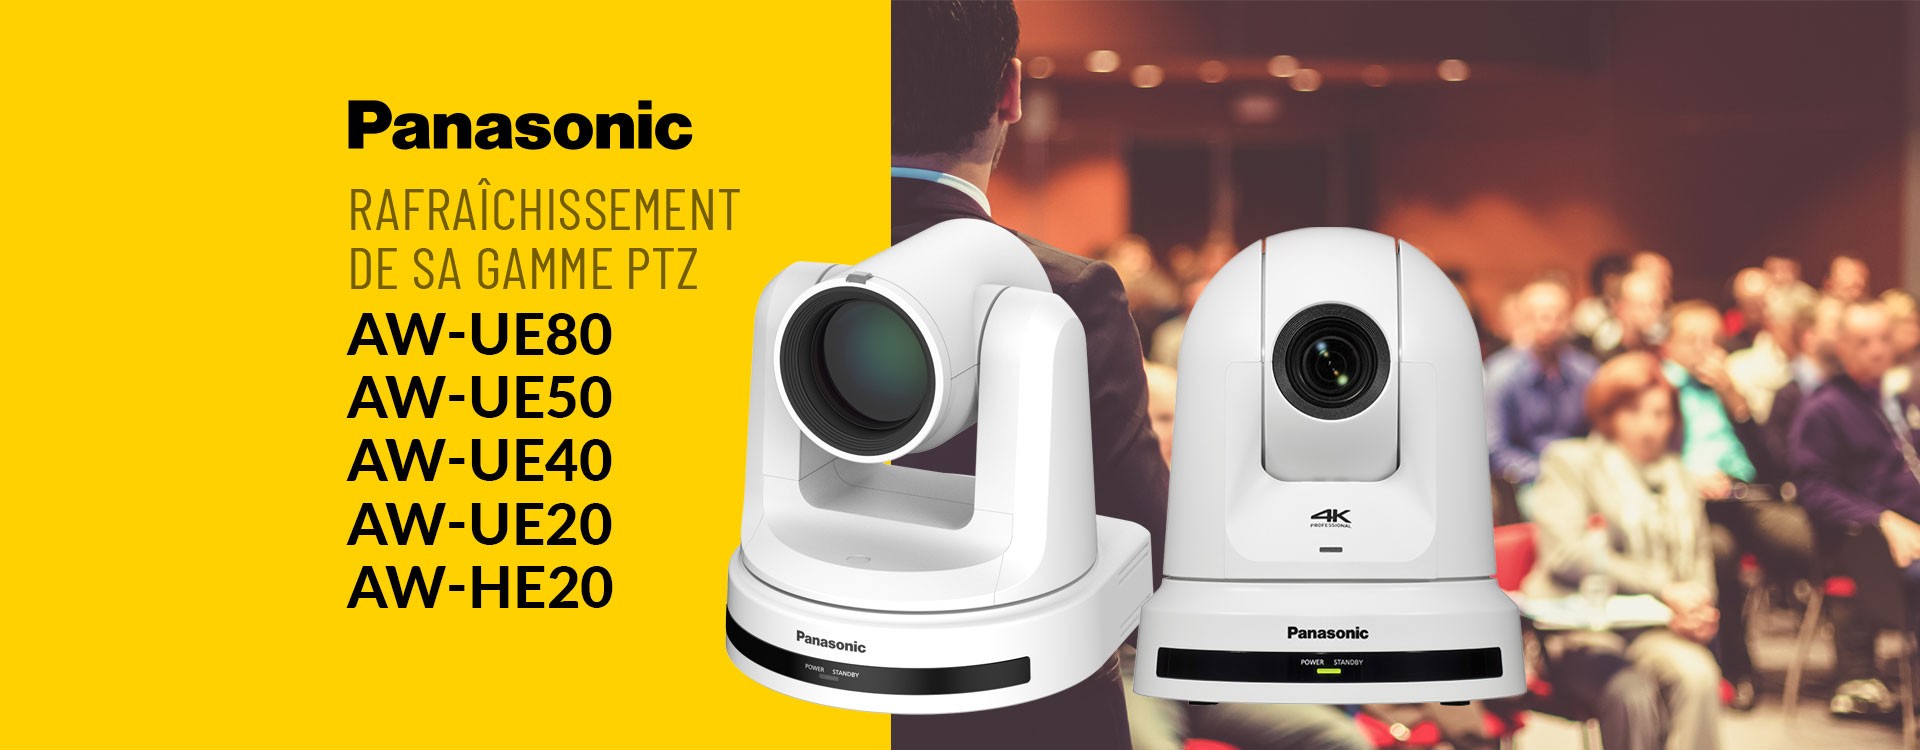 Panasonic renouvelle sa gamme de caméras motorisées PTZ